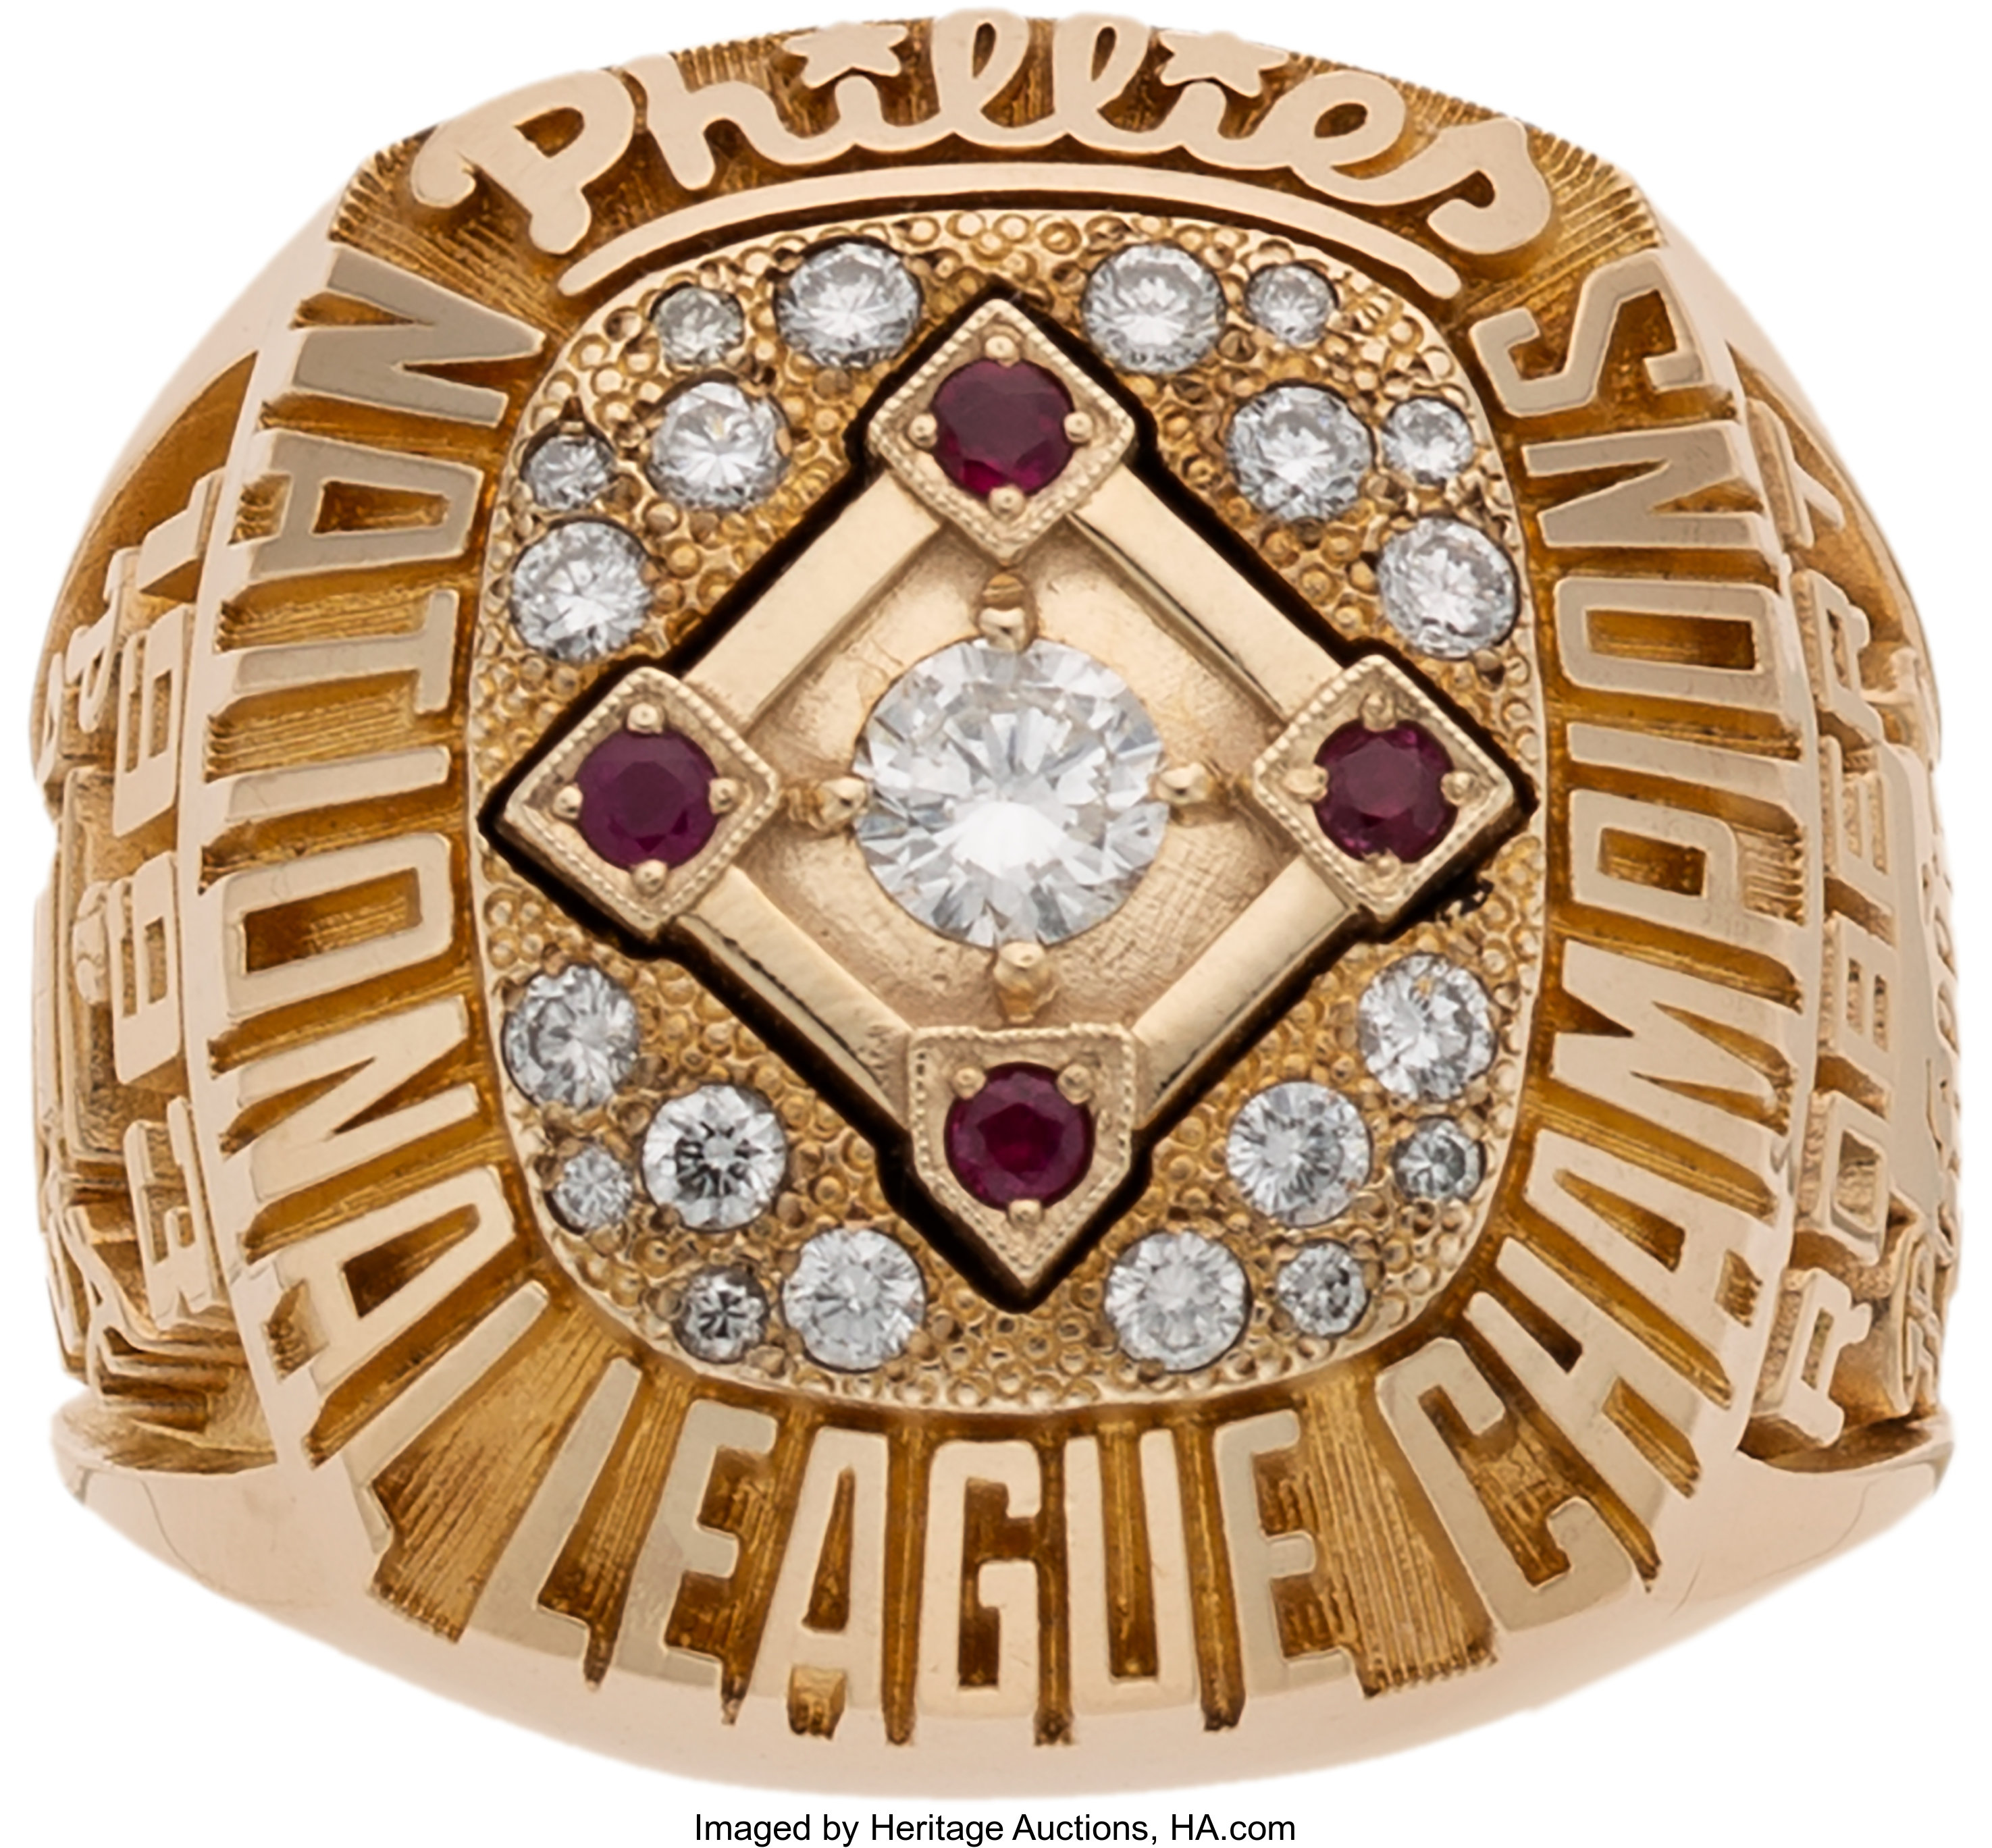 1993 Philadelphia Phillies NLCS Championship Ring 